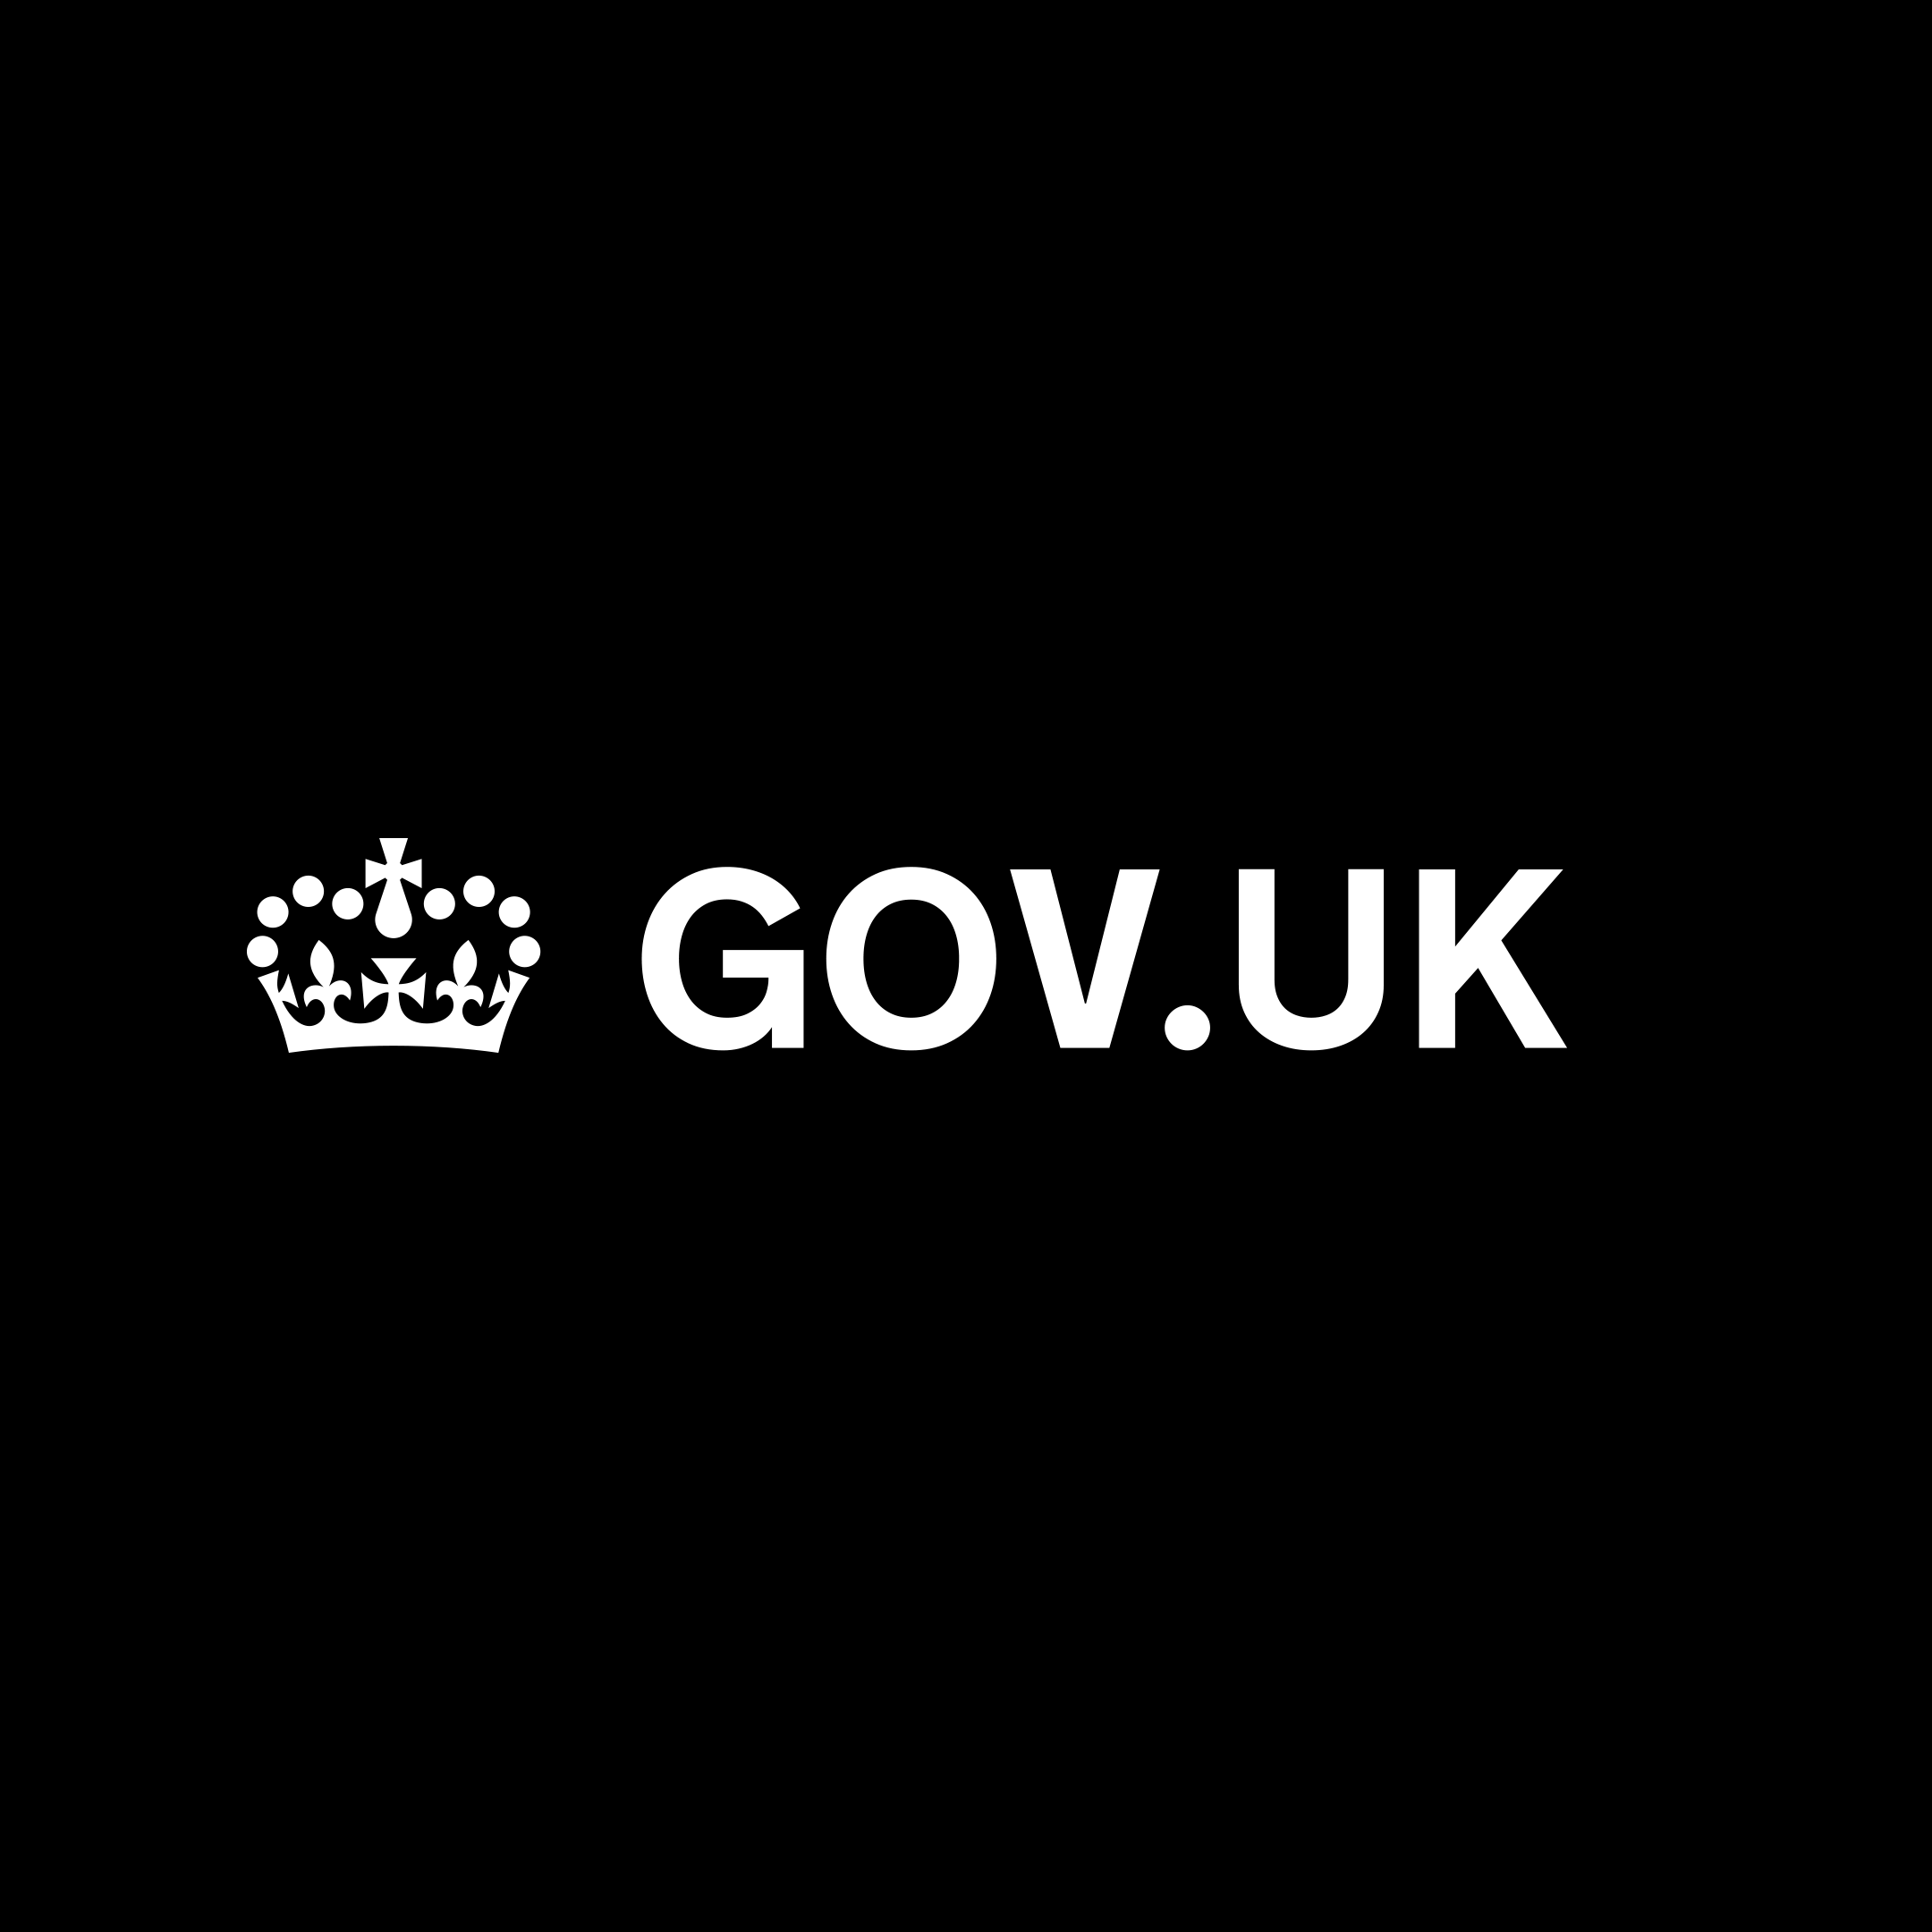 gov.uk logo on black background